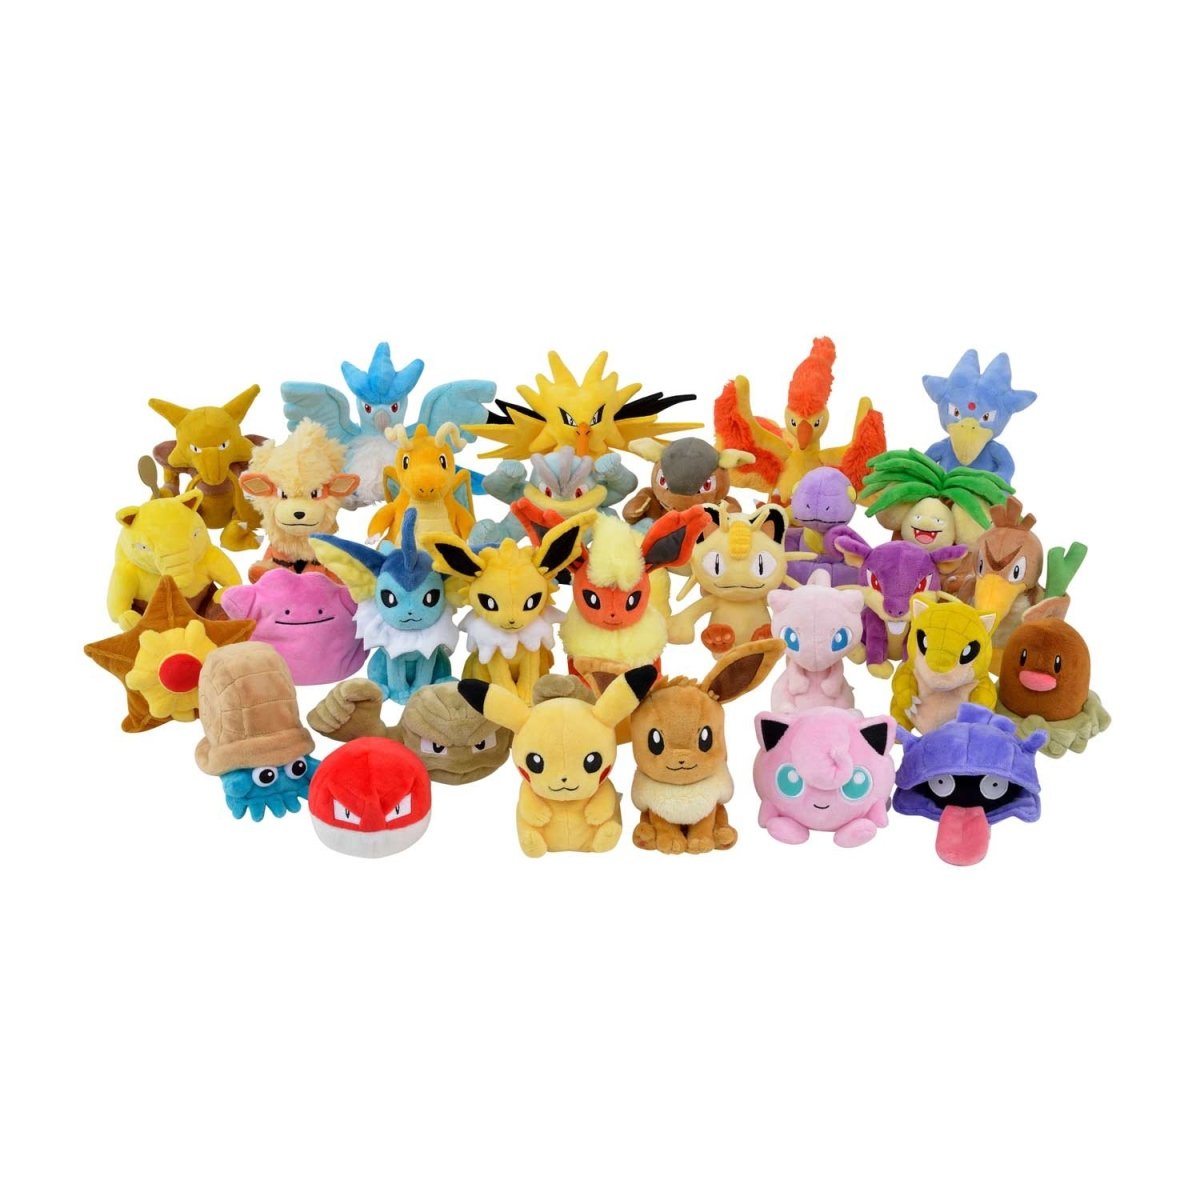 Moltres Pokemon All Star Collection Plush